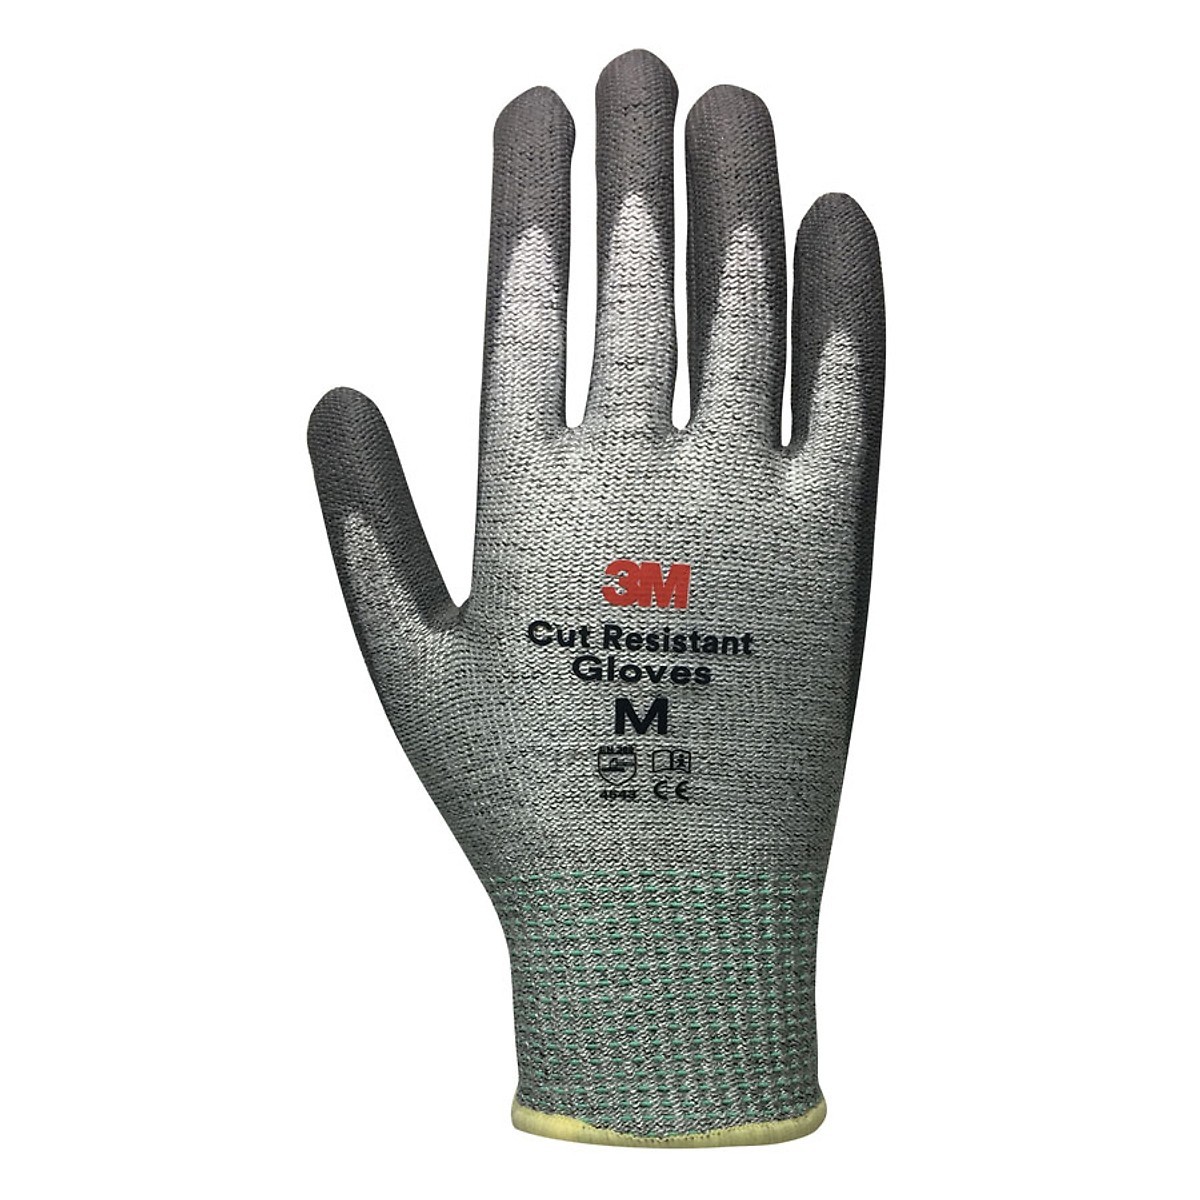 3M Cut Resistant Gloves (ATG-3M-LV5-S)